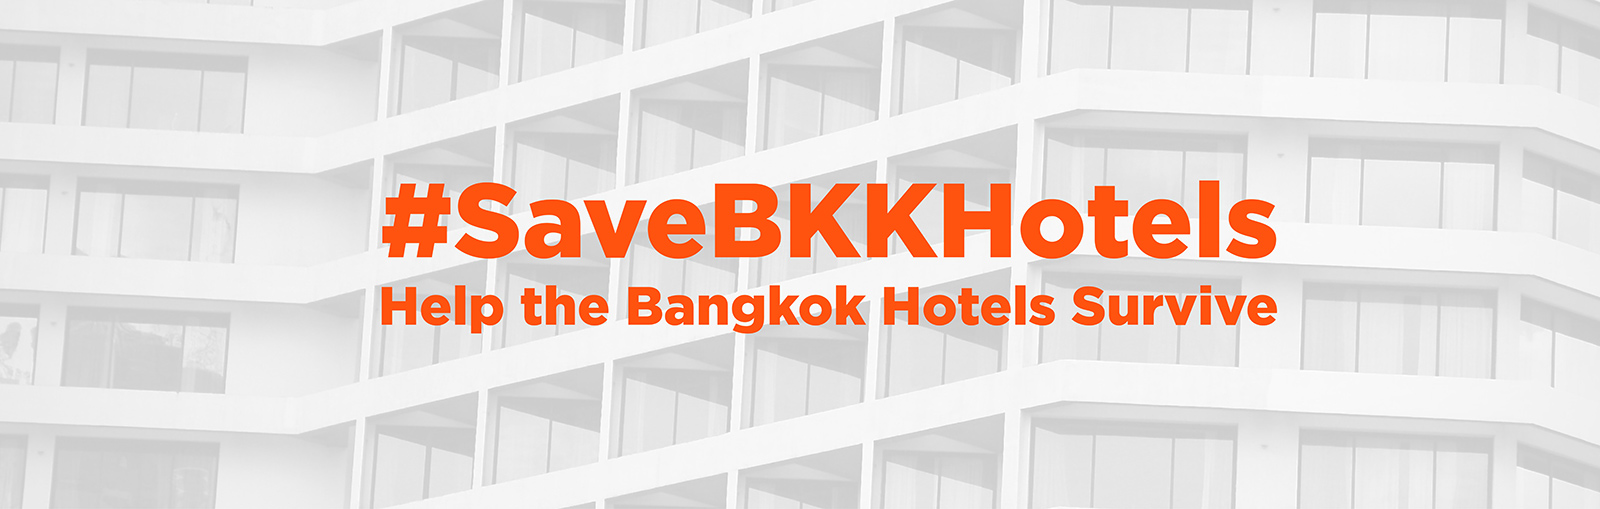 #SaveBkkHotels - Help the Bangkok Hotels Survive